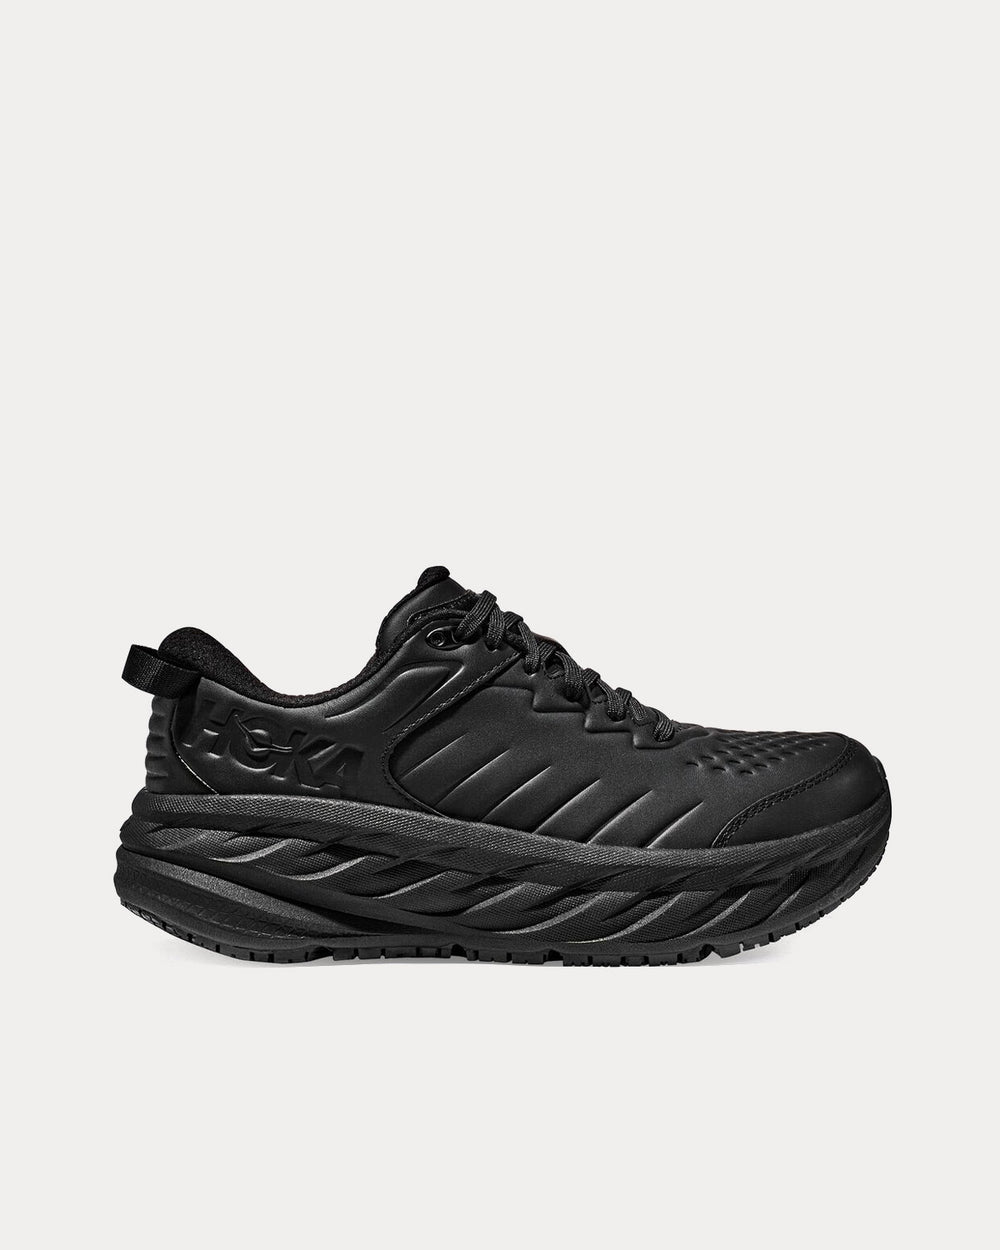 Hoka Bondi SR Black / Black Running Shoes - Sneak in Peace